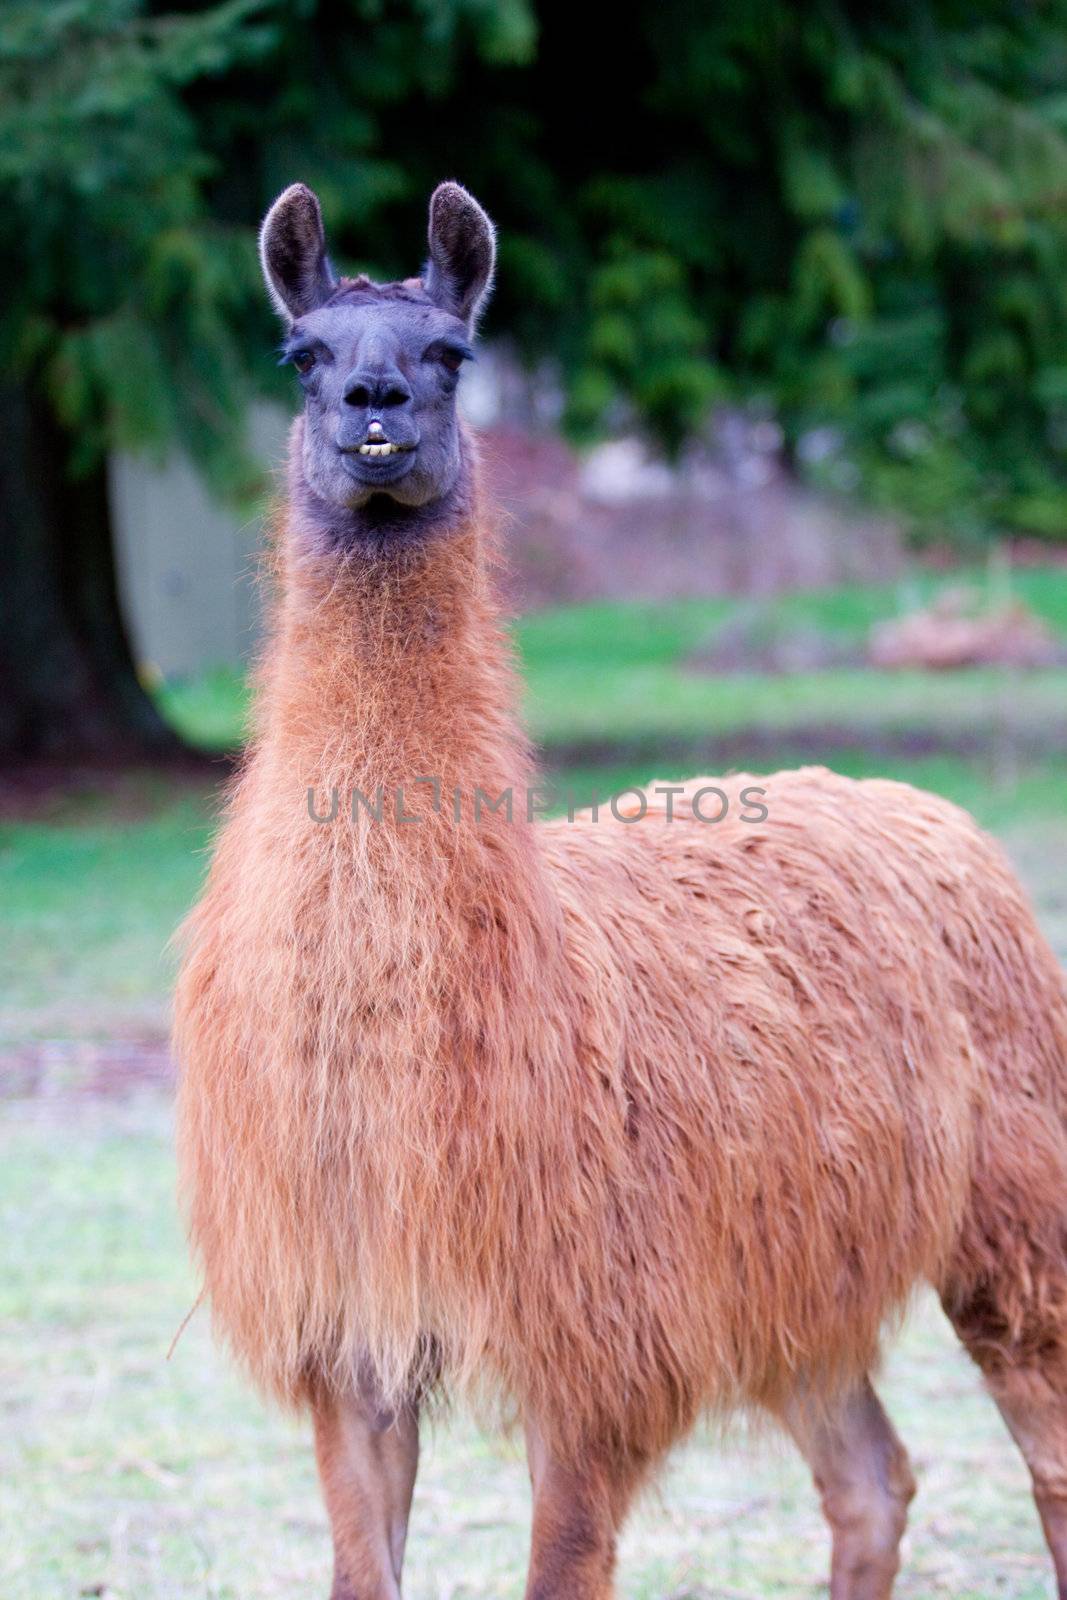 Llama in Field by joshuaraineyphotography